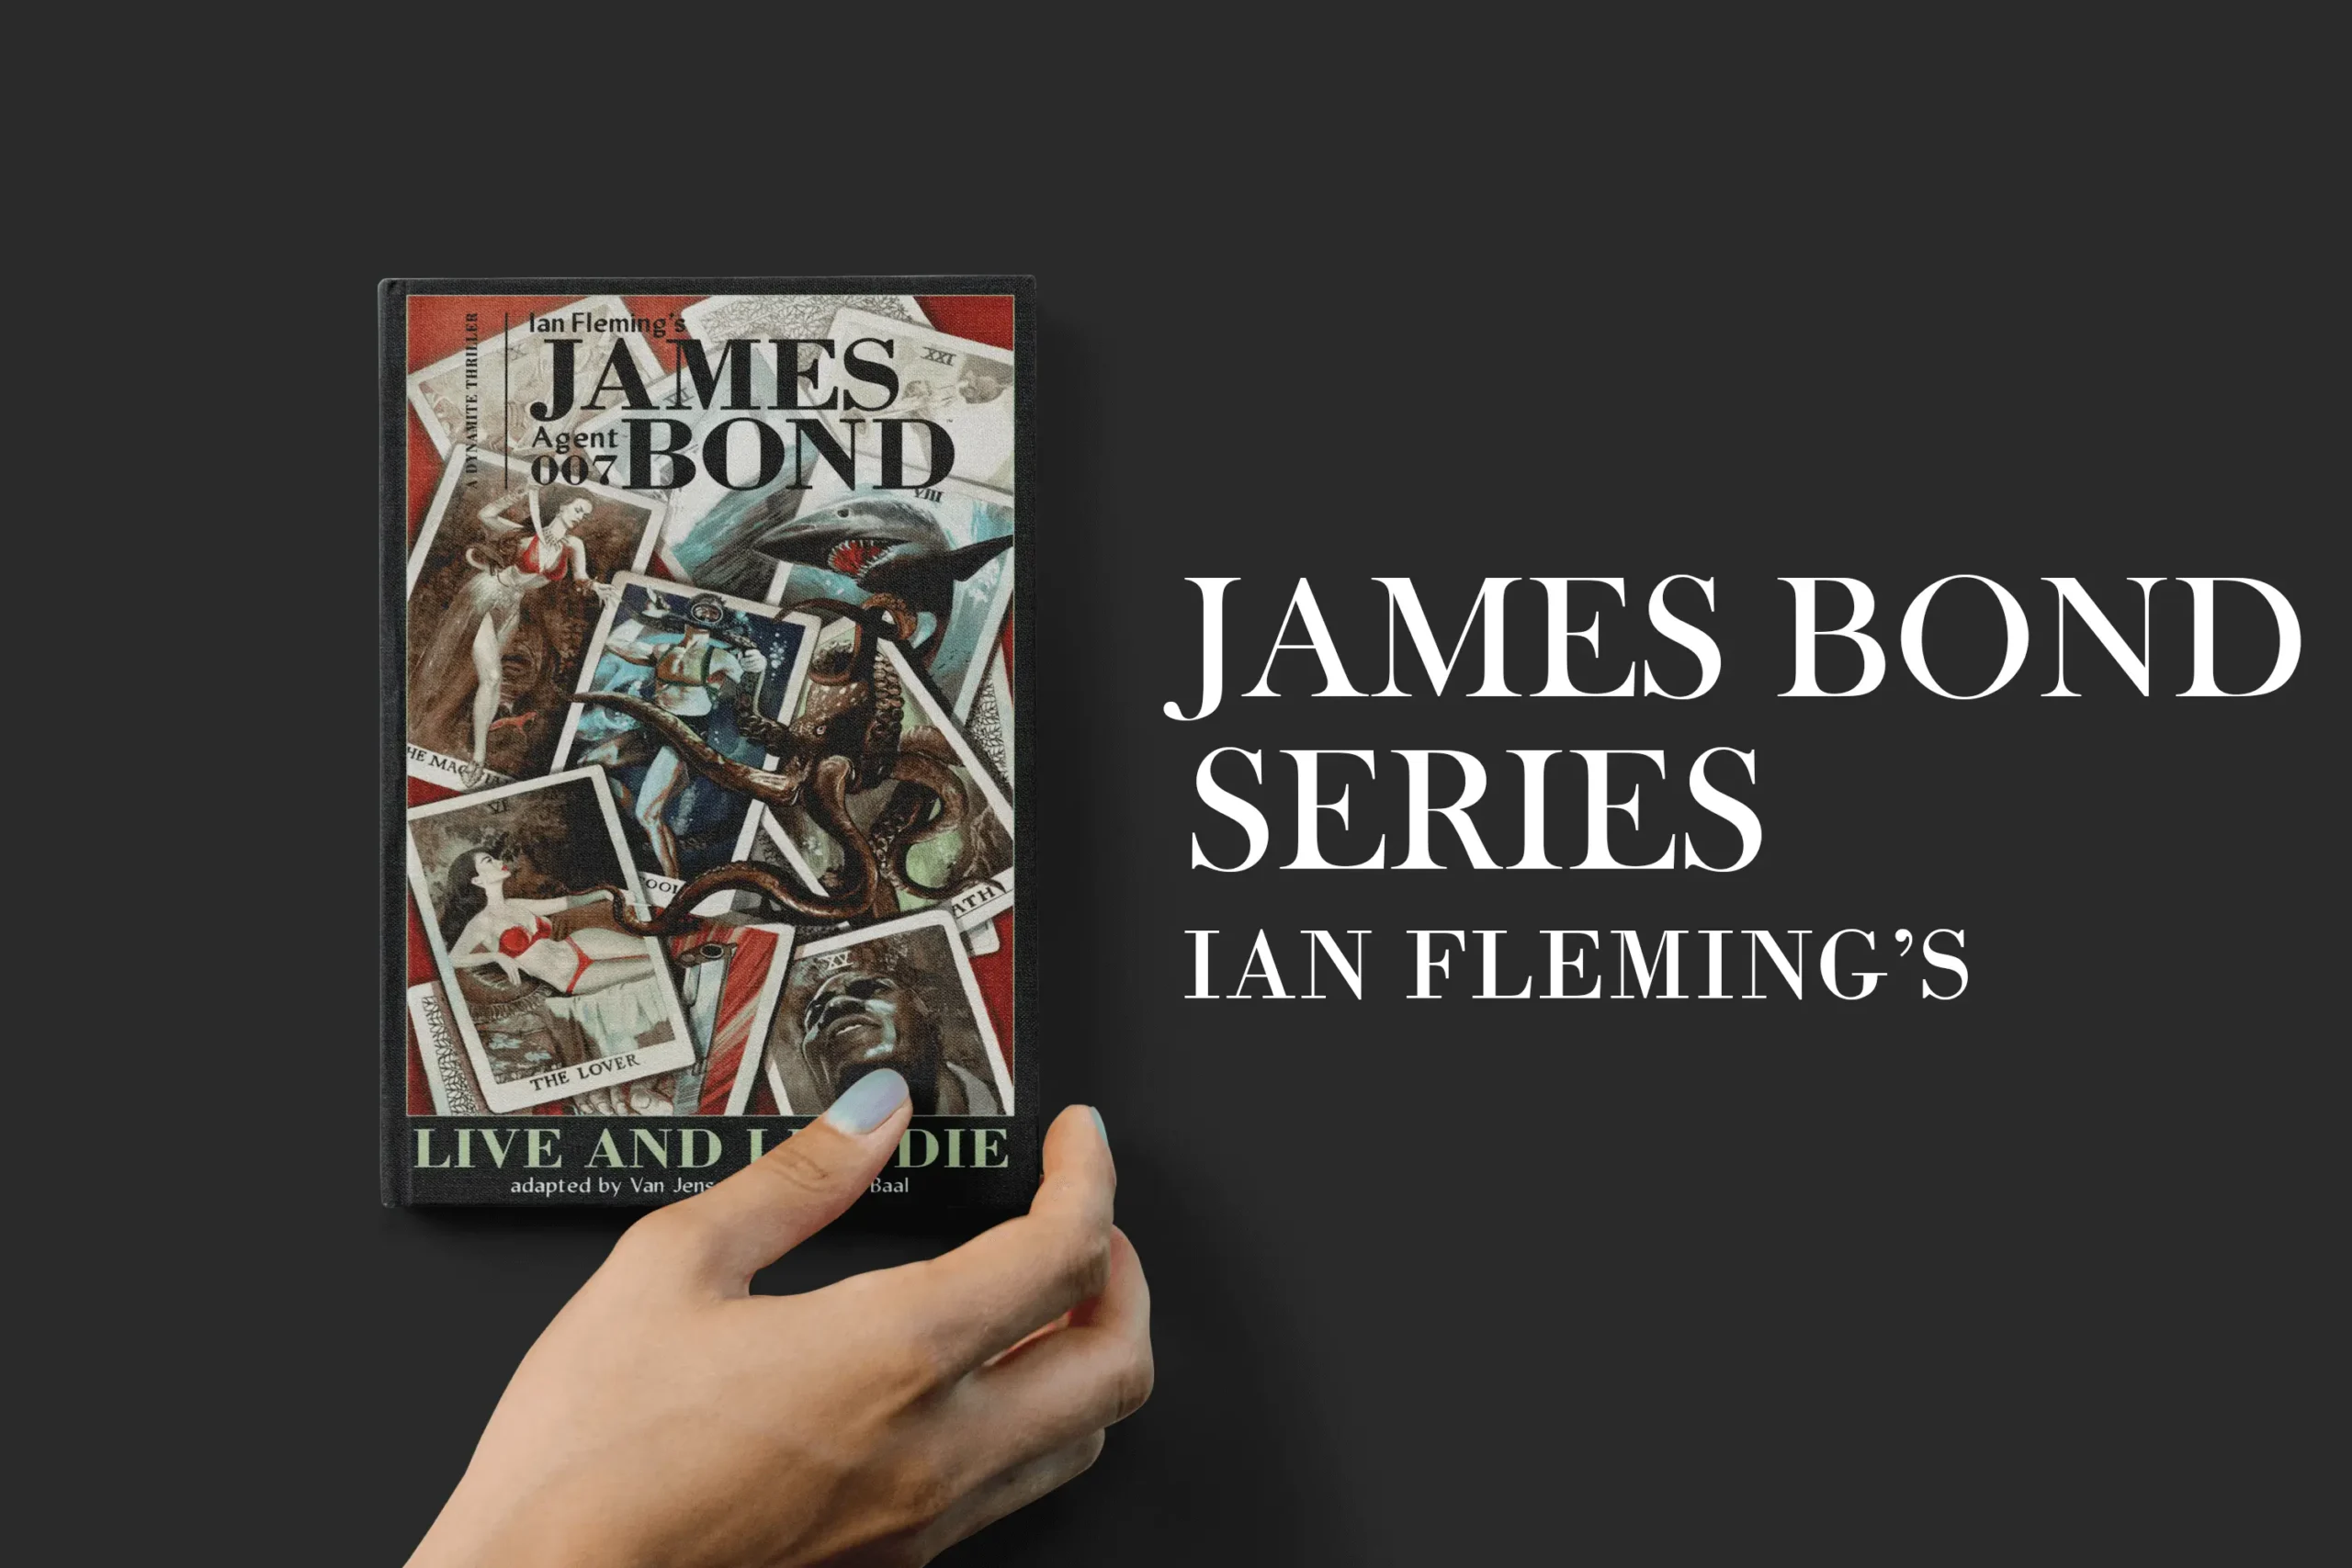 James Bond Series by Ian Fleming's